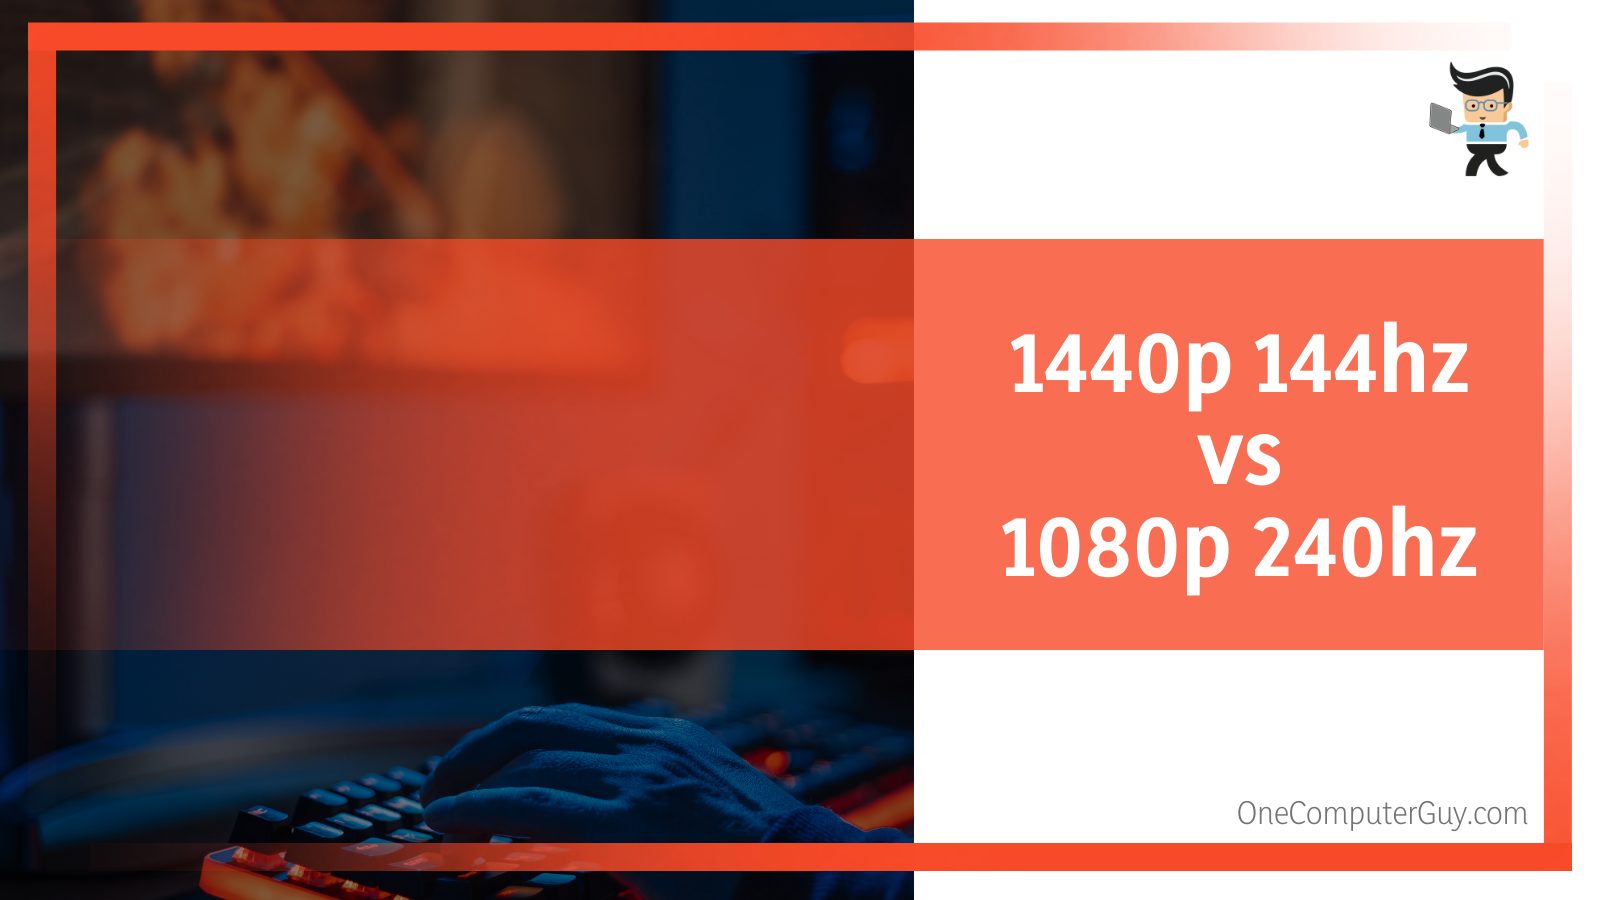 1440p 144hz vs 1080p 240hz Resolution